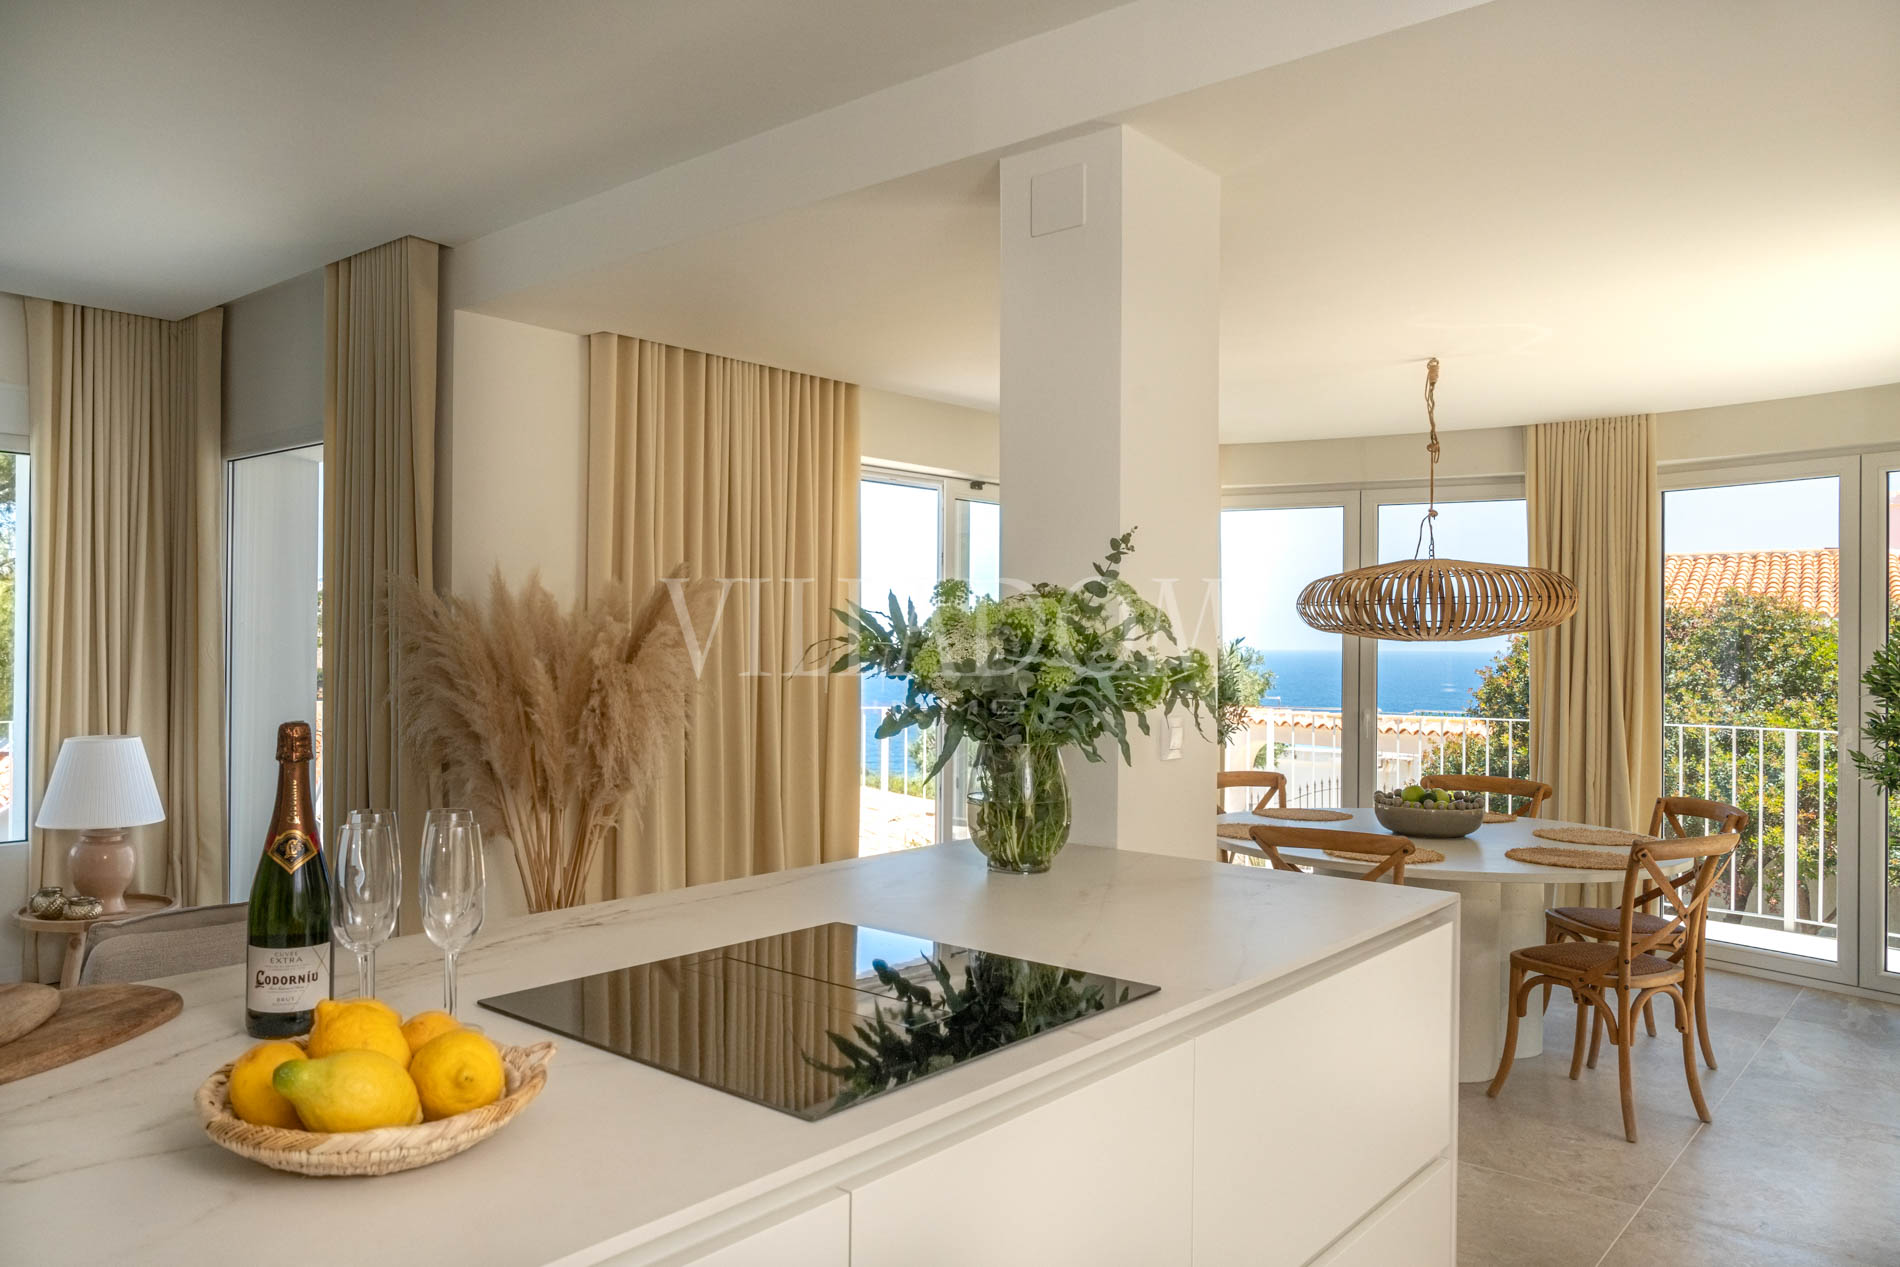 Luxury 3 bedroom villa with sea views in Javea